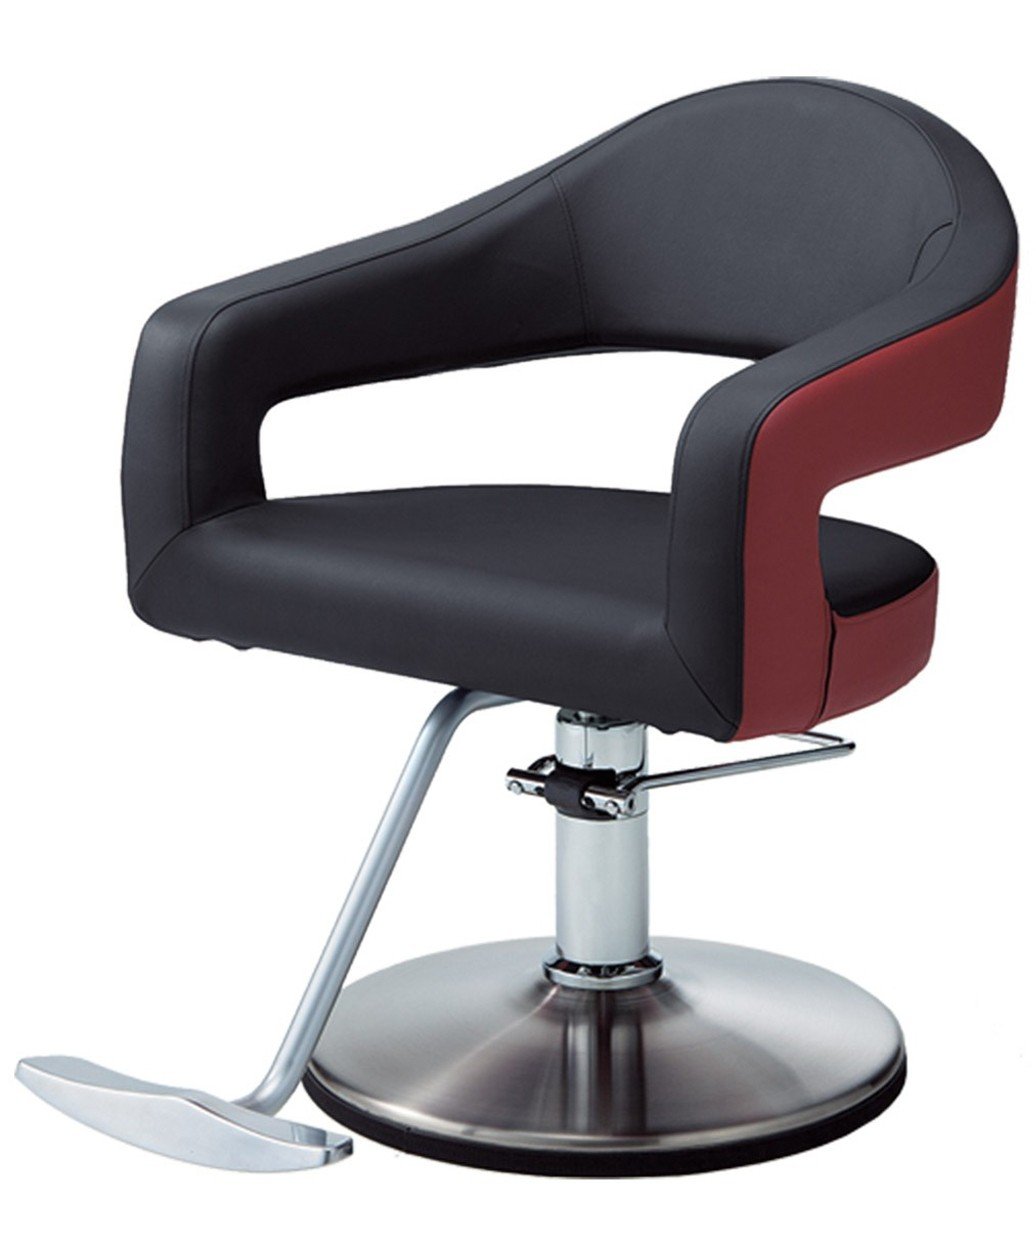 Takara Belmont ST-N50 Knoll Styling Chair